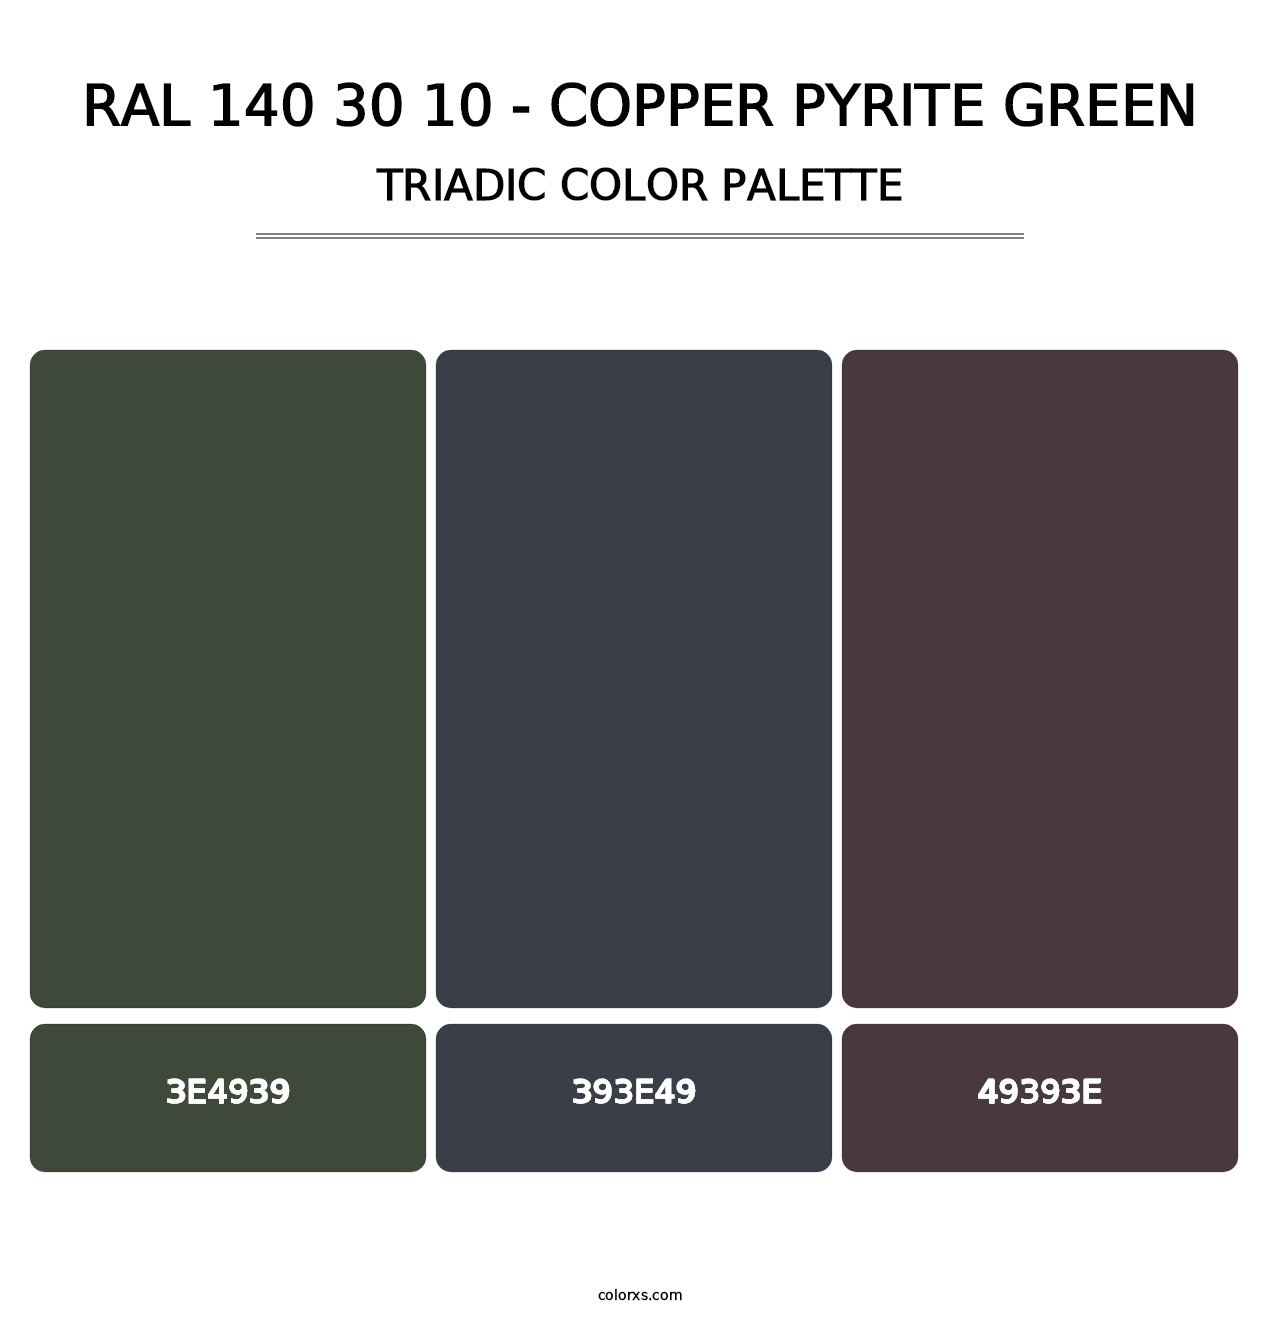 RAL 140 30 10 - Copper Pyrite Green - Triadic Color Palette